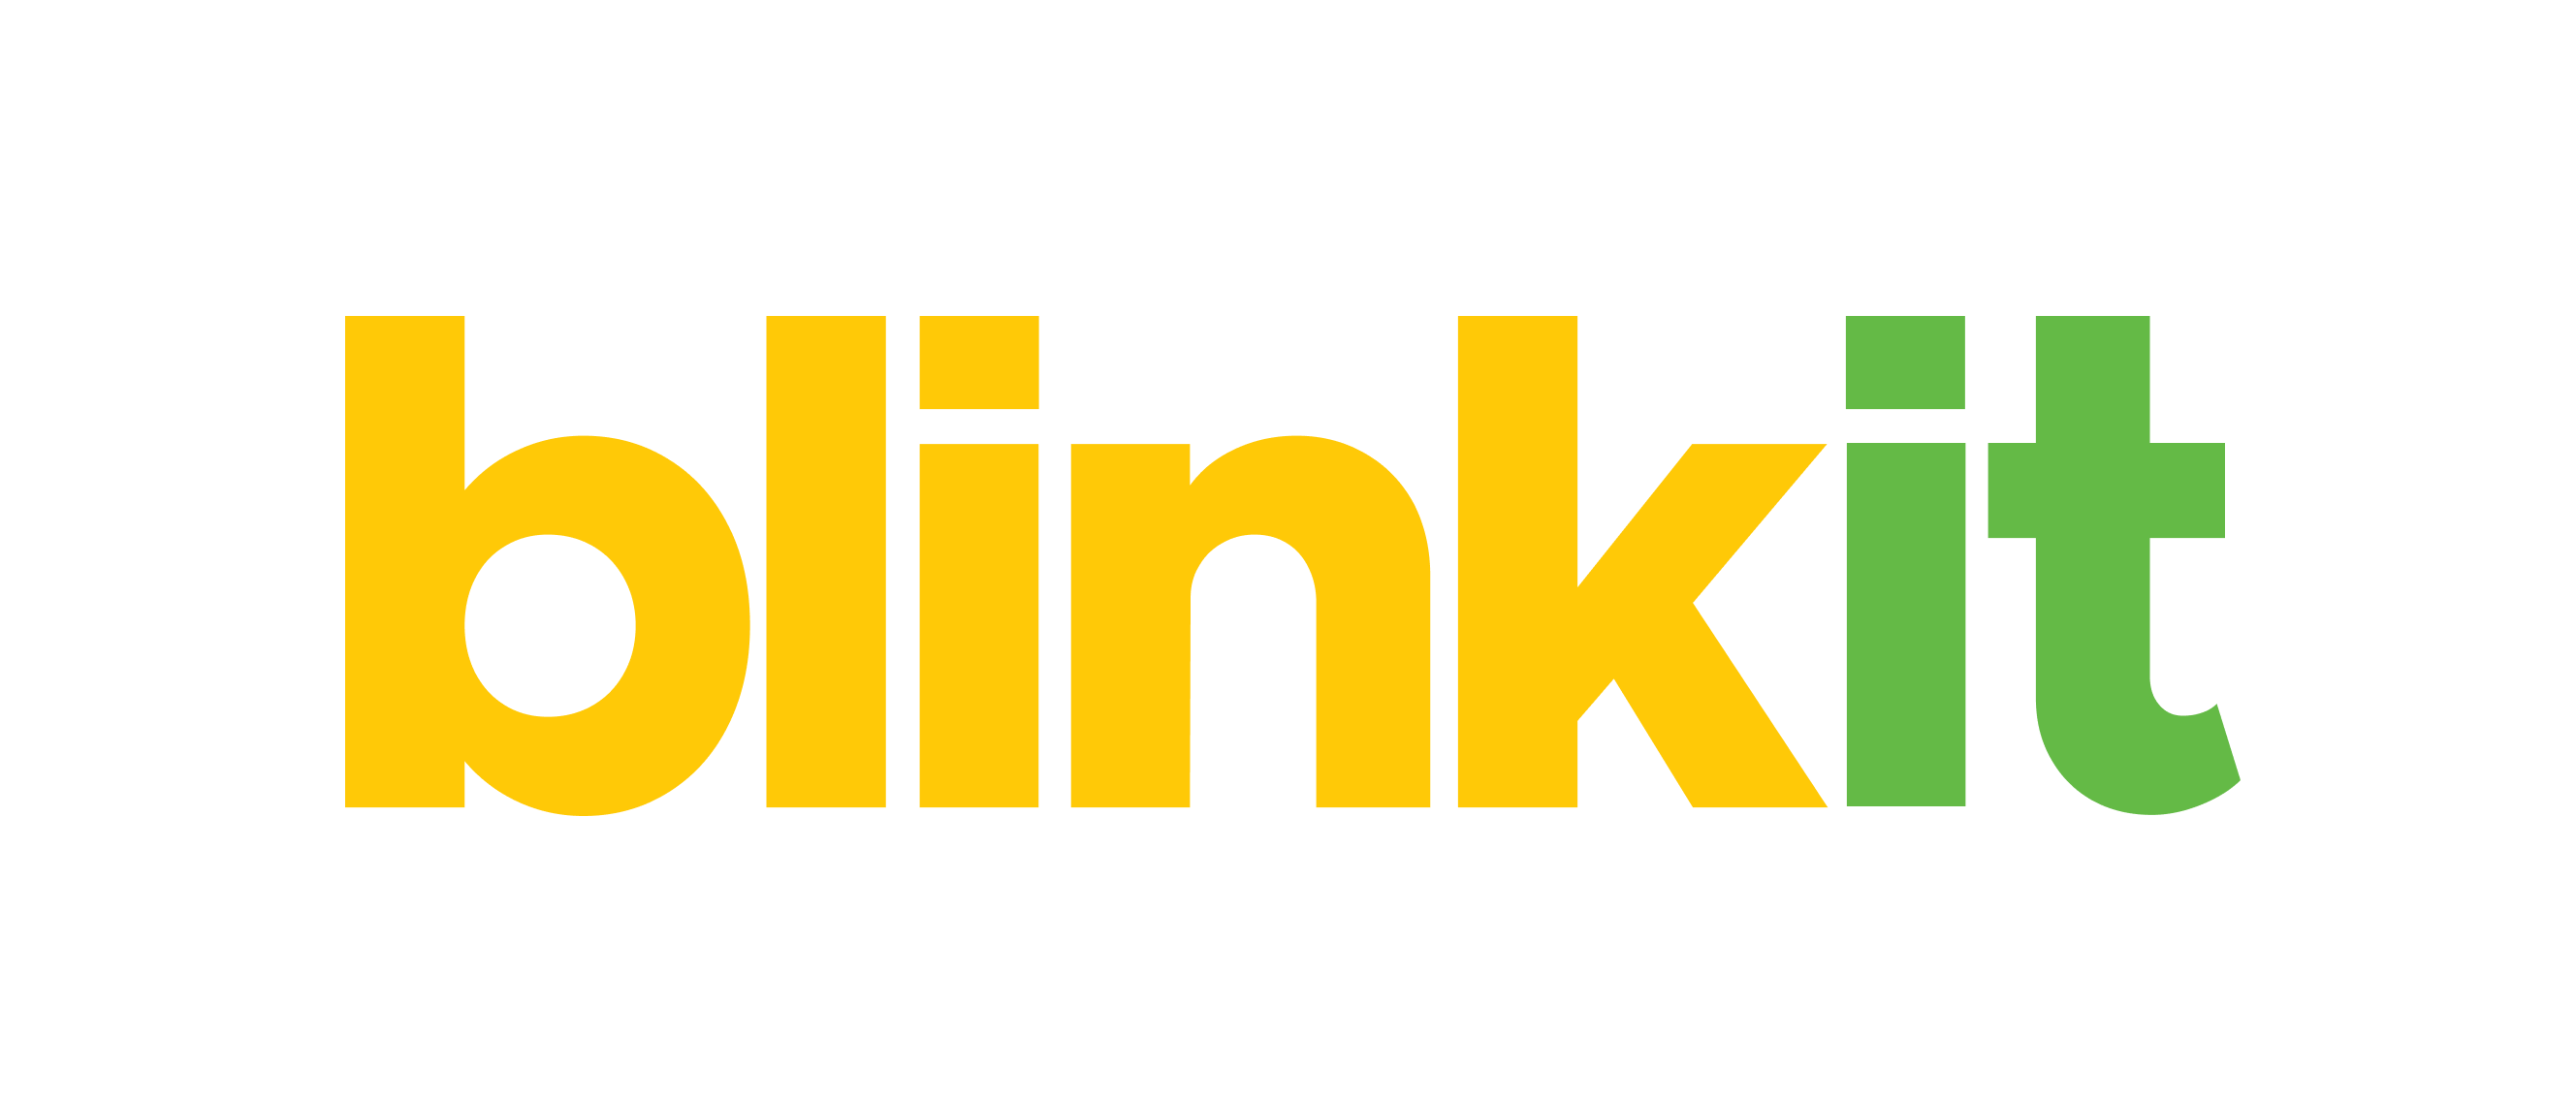 Vision Fund investment portfolio company Blinkit's logo